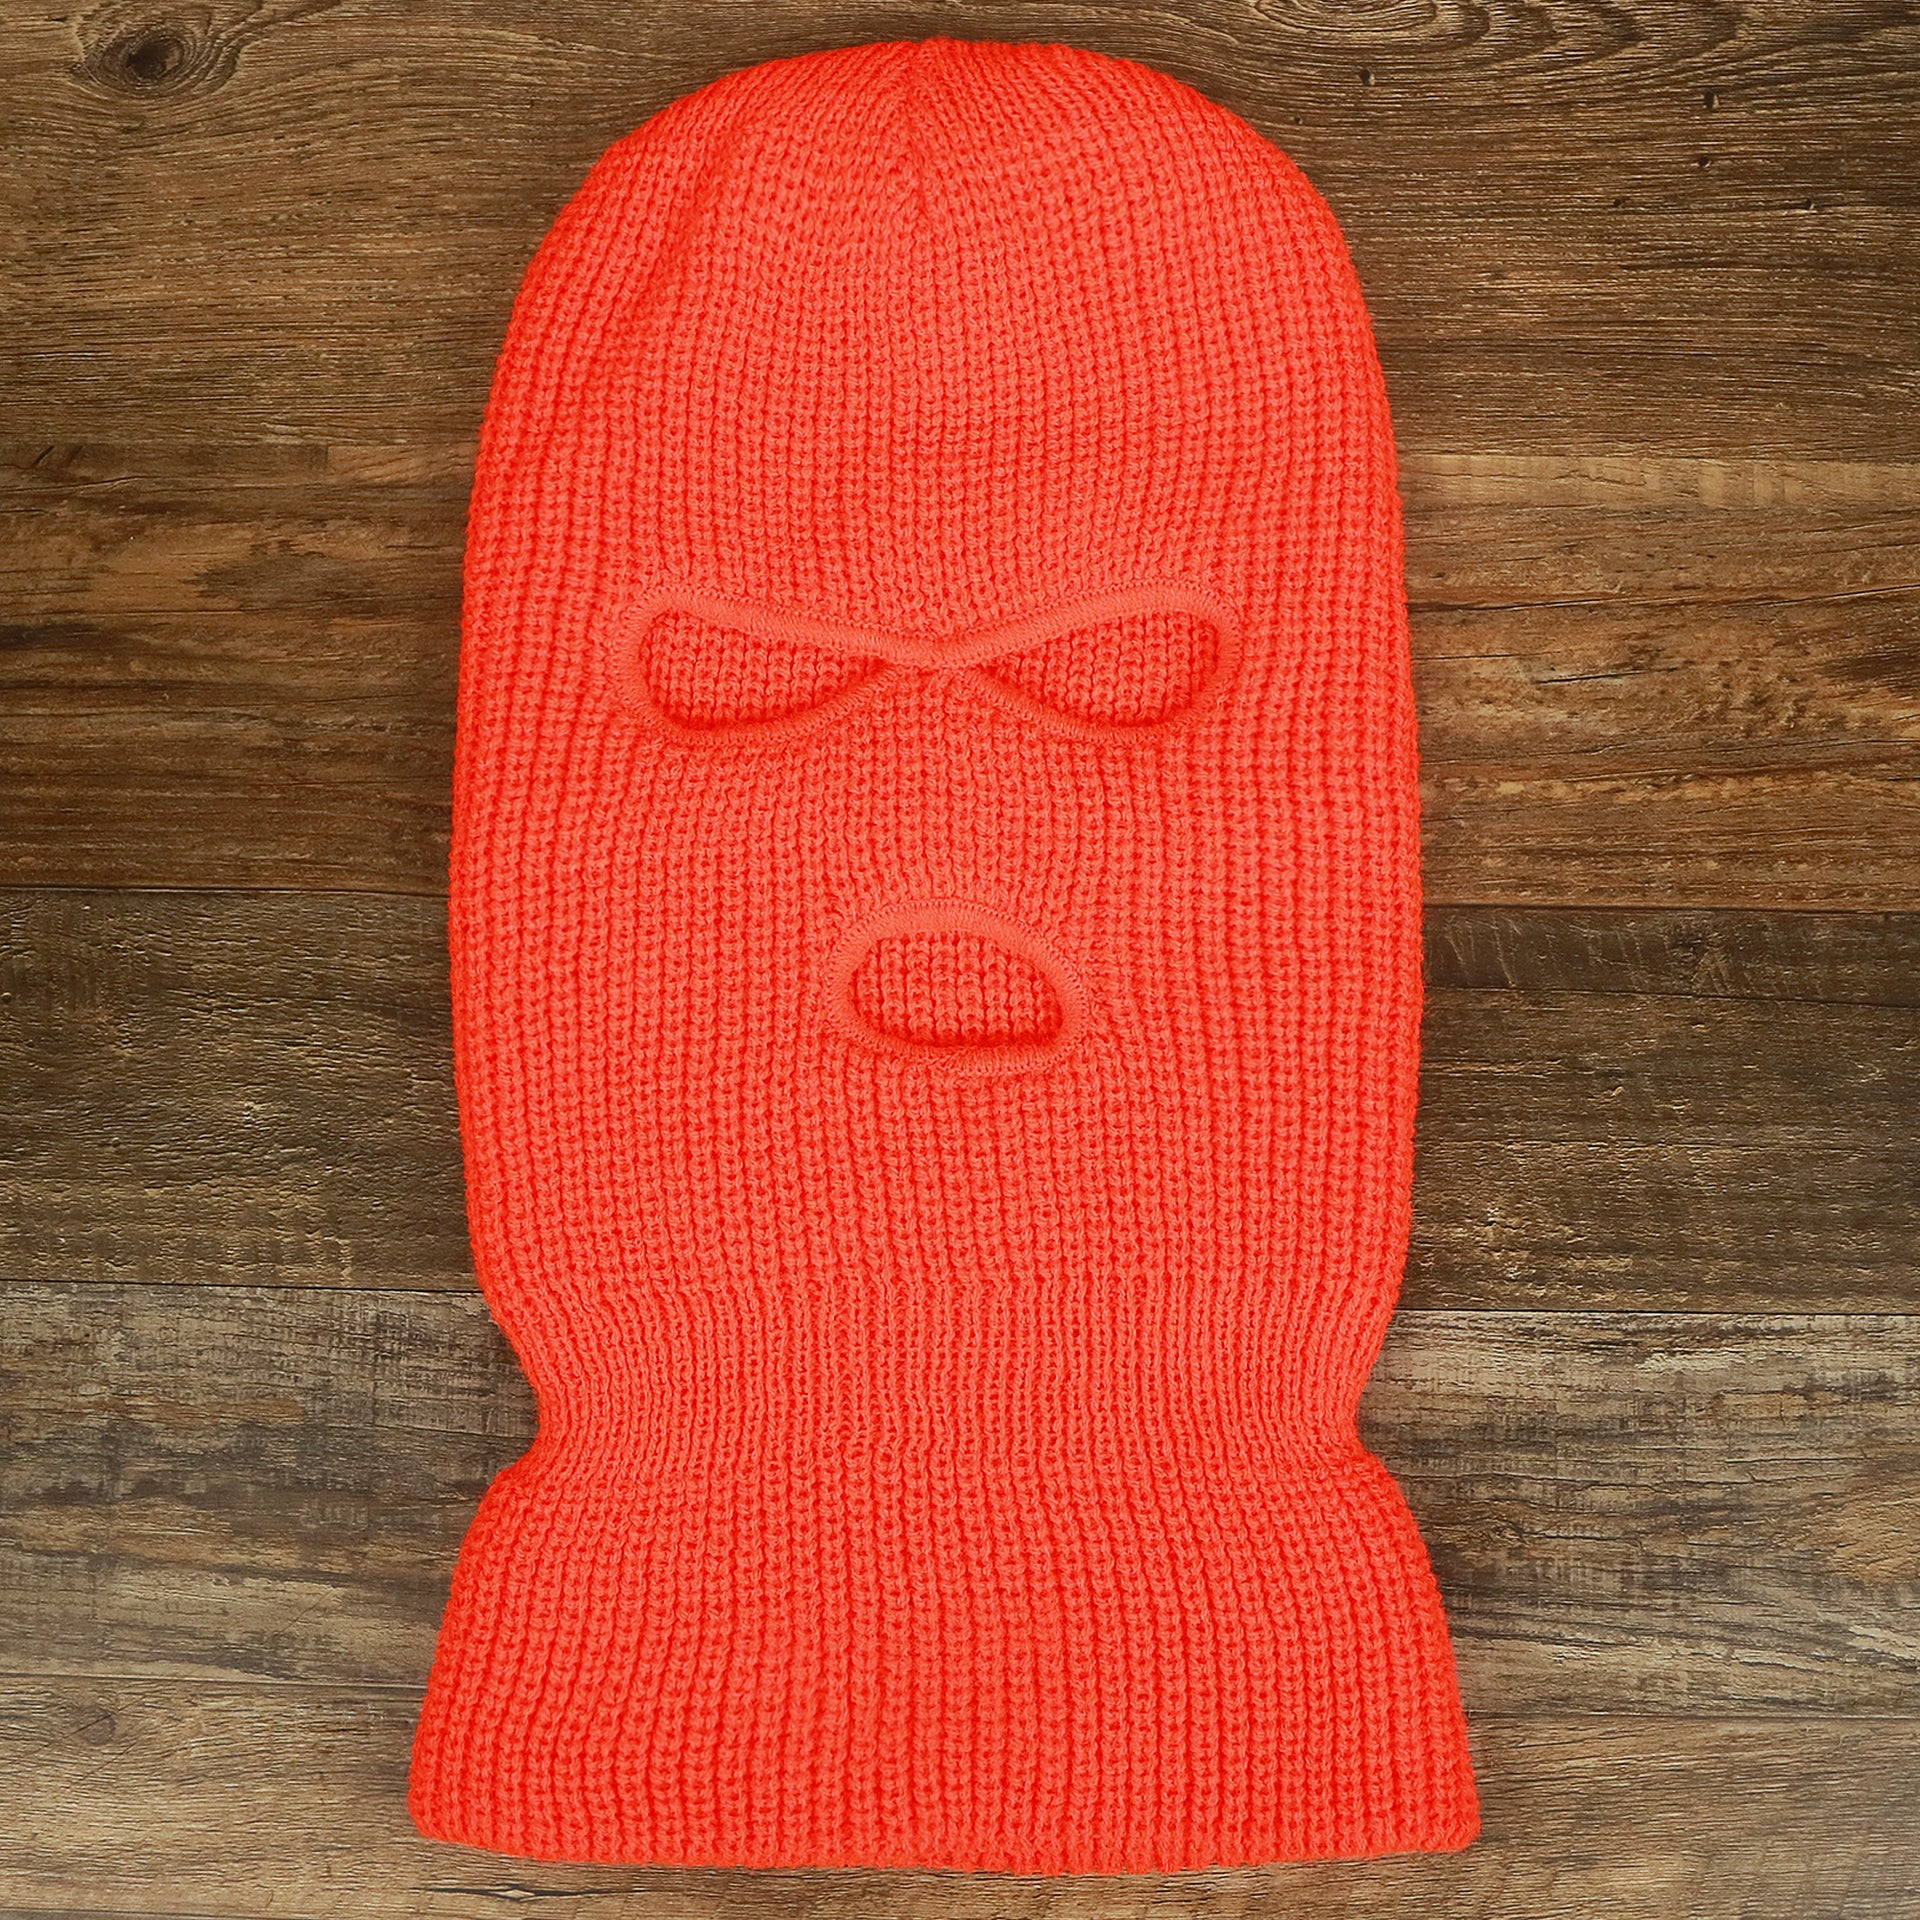 The Safety Orange Snug Fit Three Hole Balaclava | Neon Orange Knit Ski Mask on the floor